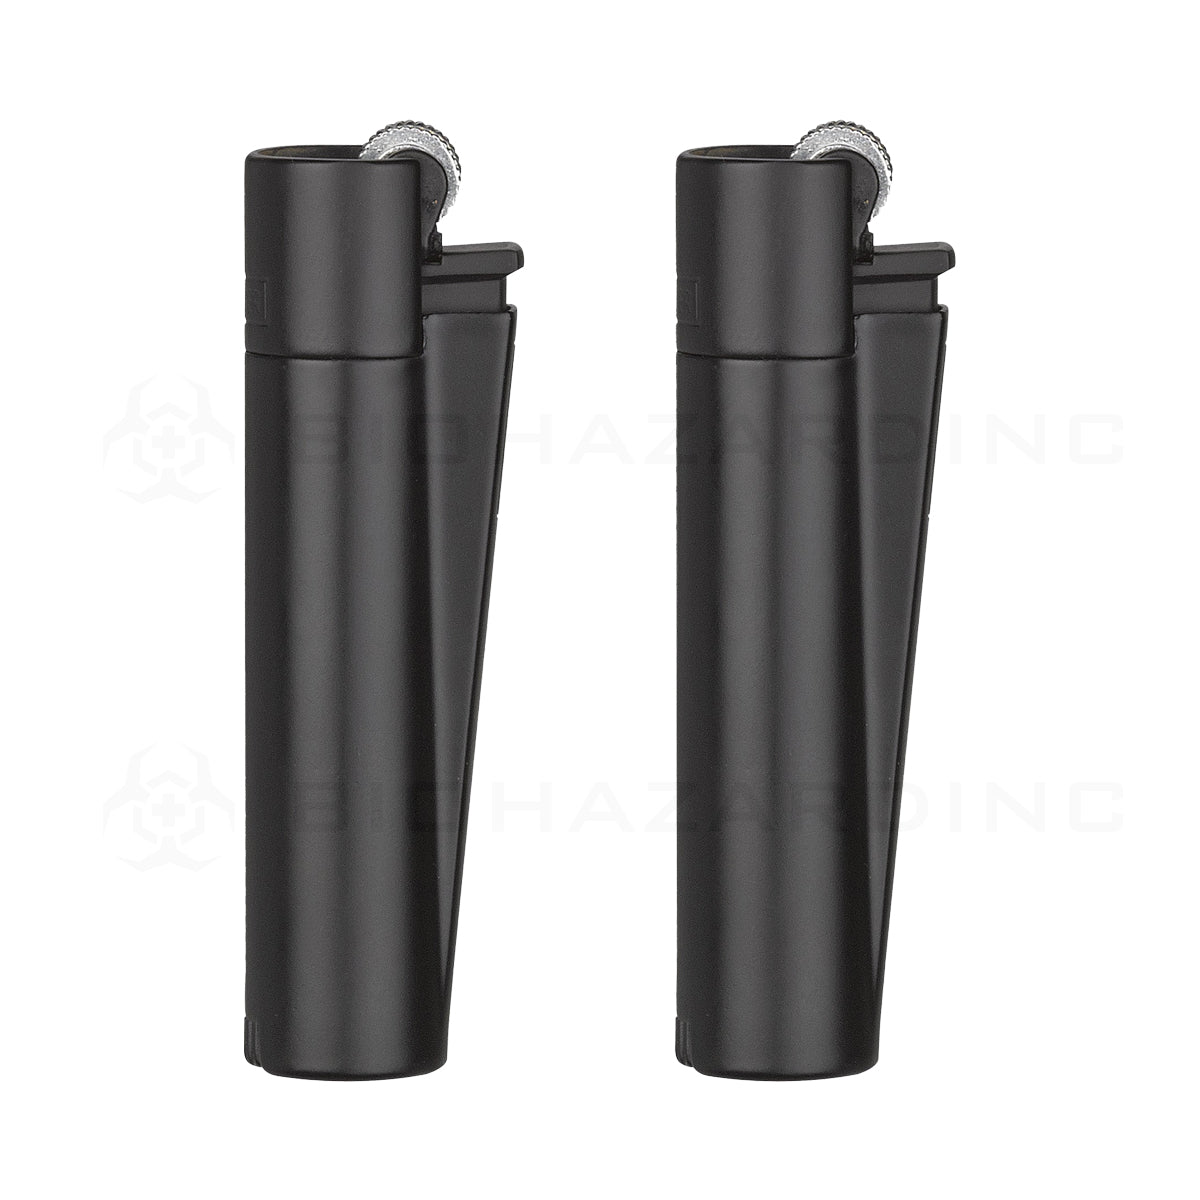 Clipper® | 'Retail Display' Metal Series | Matte Black - 12 Count Lighters Clipper   